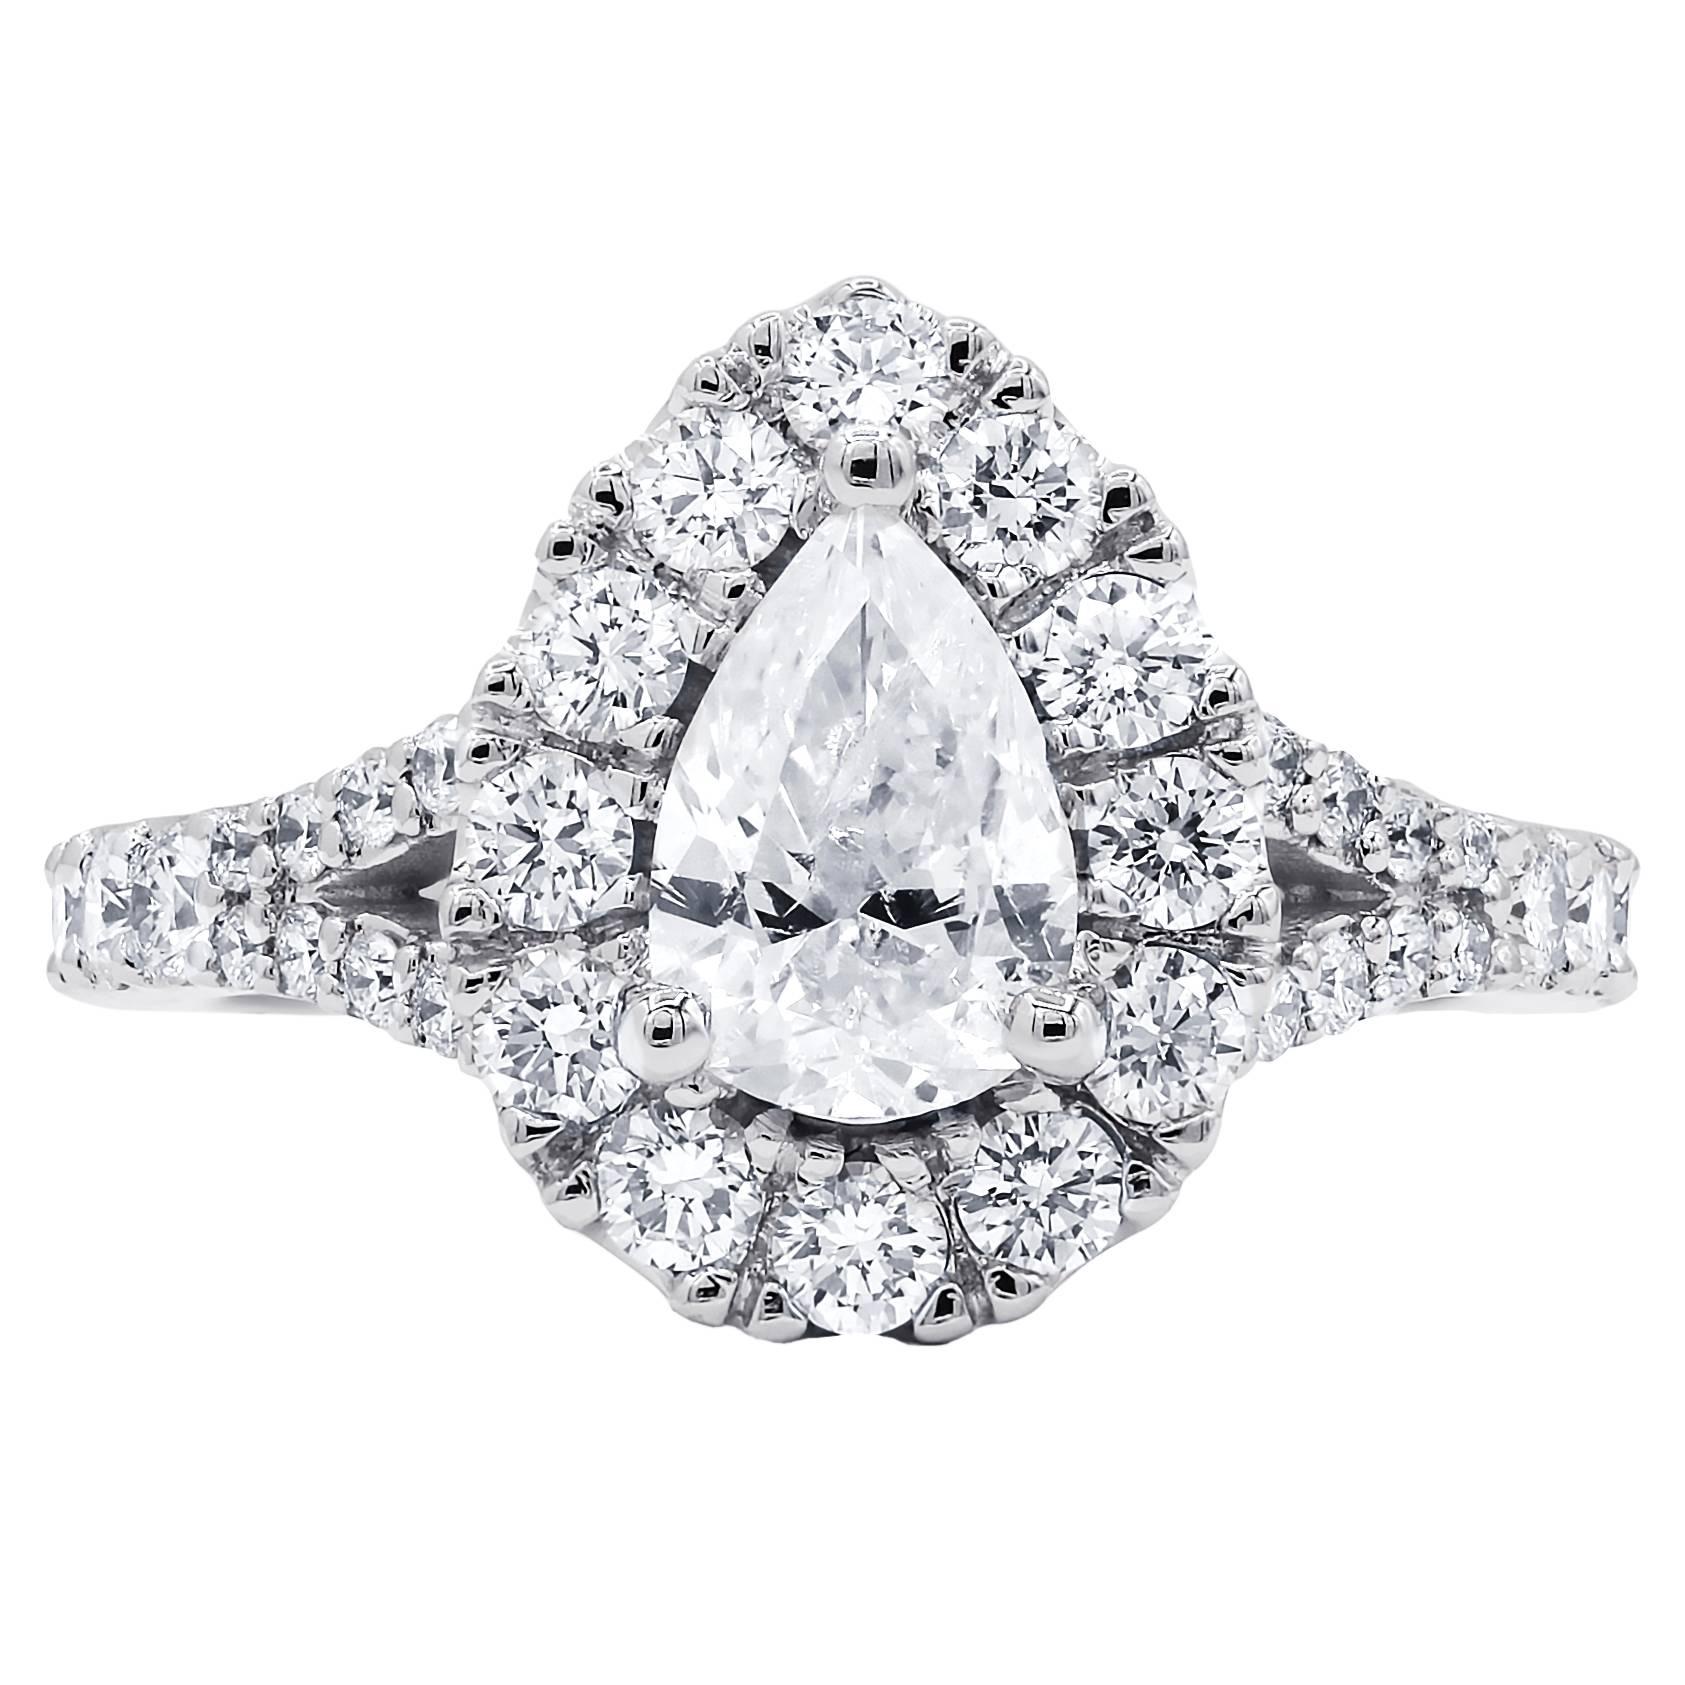 Certified 1.97 Carat Halo Pear Cut Diamond Ring